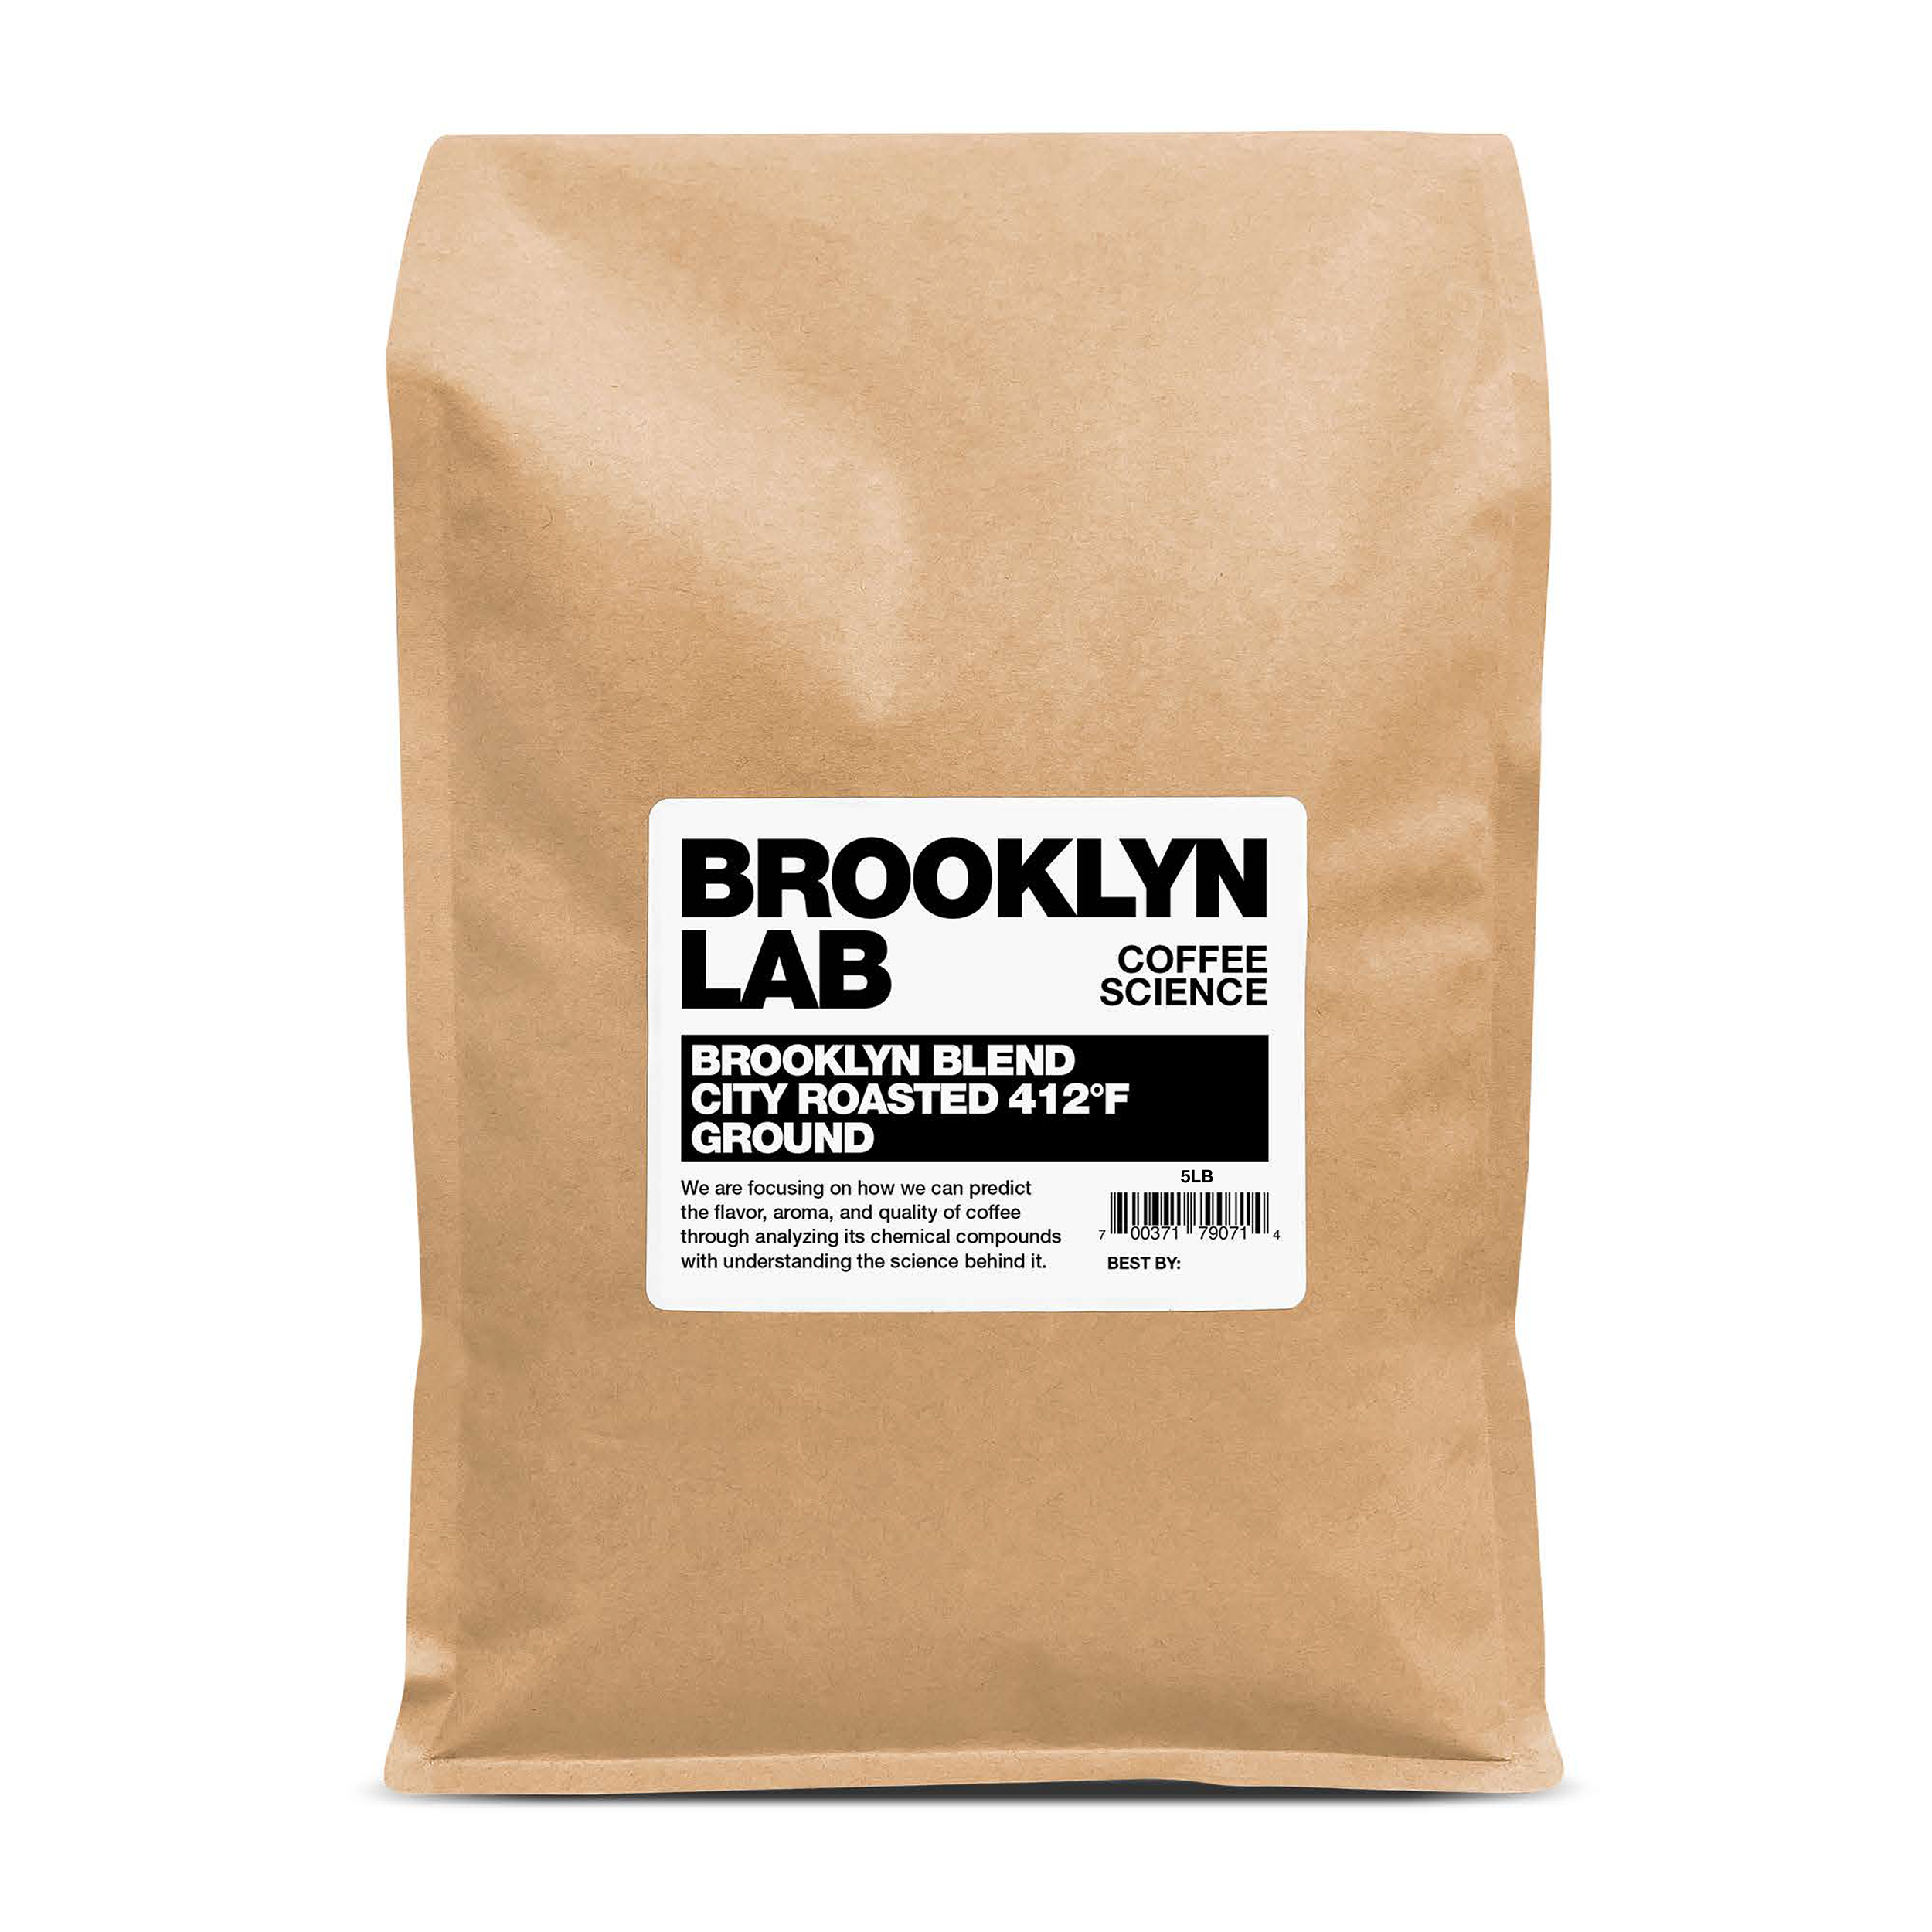 Brooklyn Blend, City 412°F